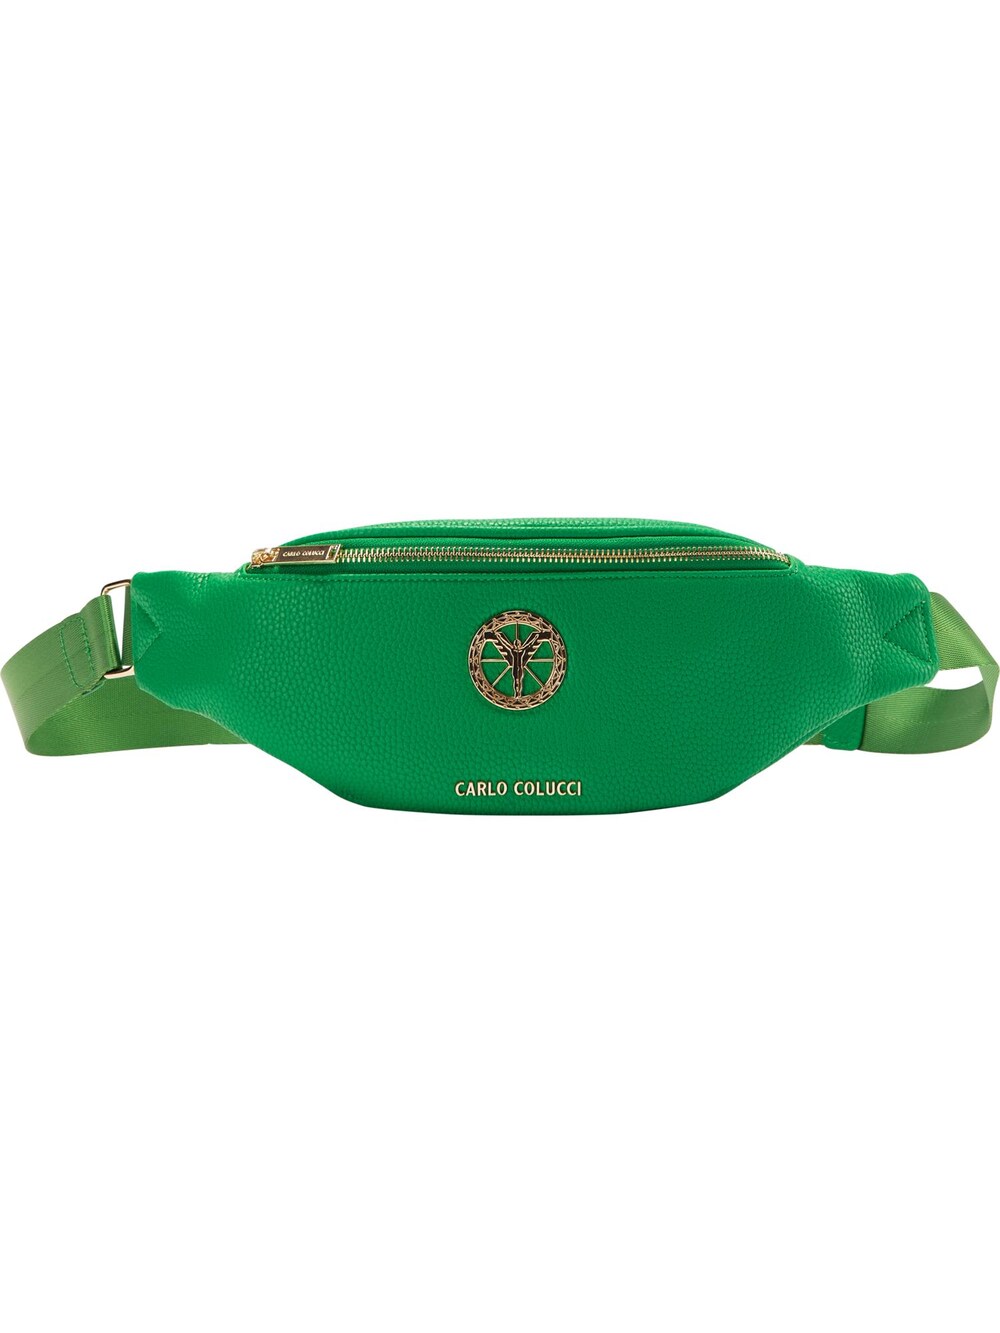 Поясная сумка Carlo Colucci Caesaro, зеленый поясная сумка carlo gattini 7013 01